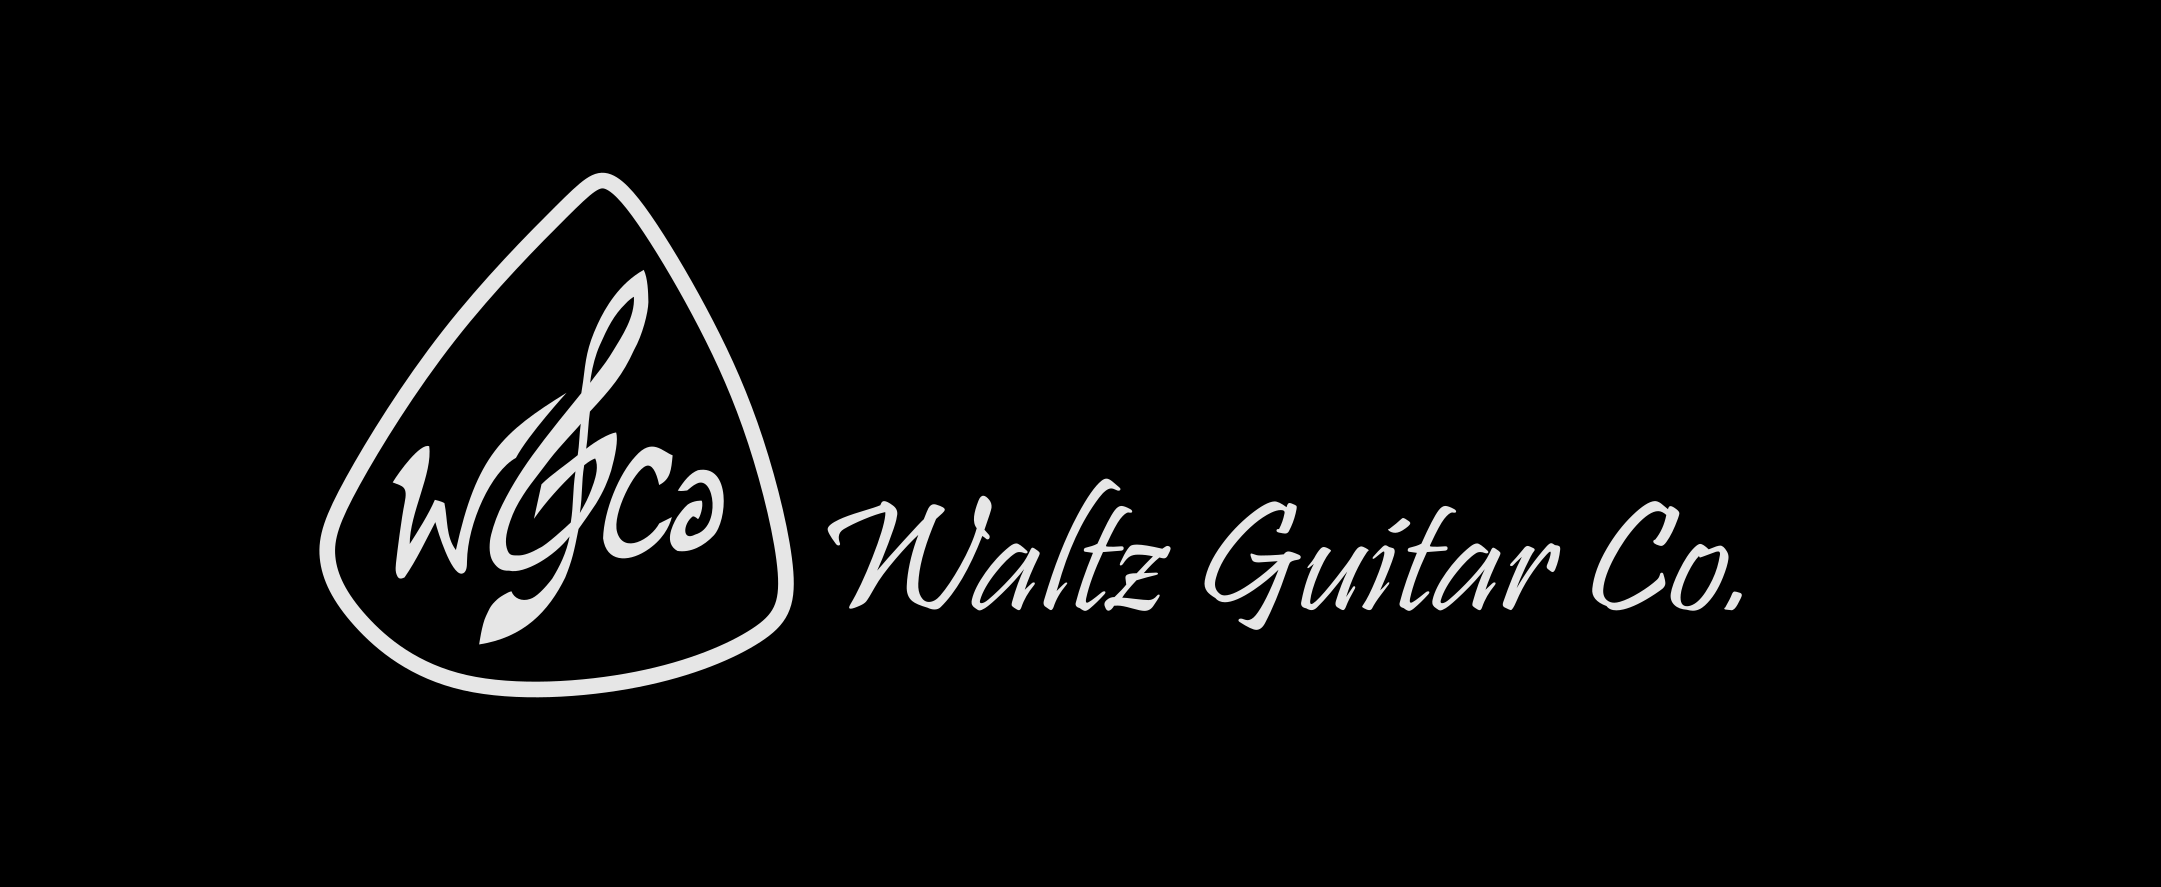 Waltz Guitar Co Logo